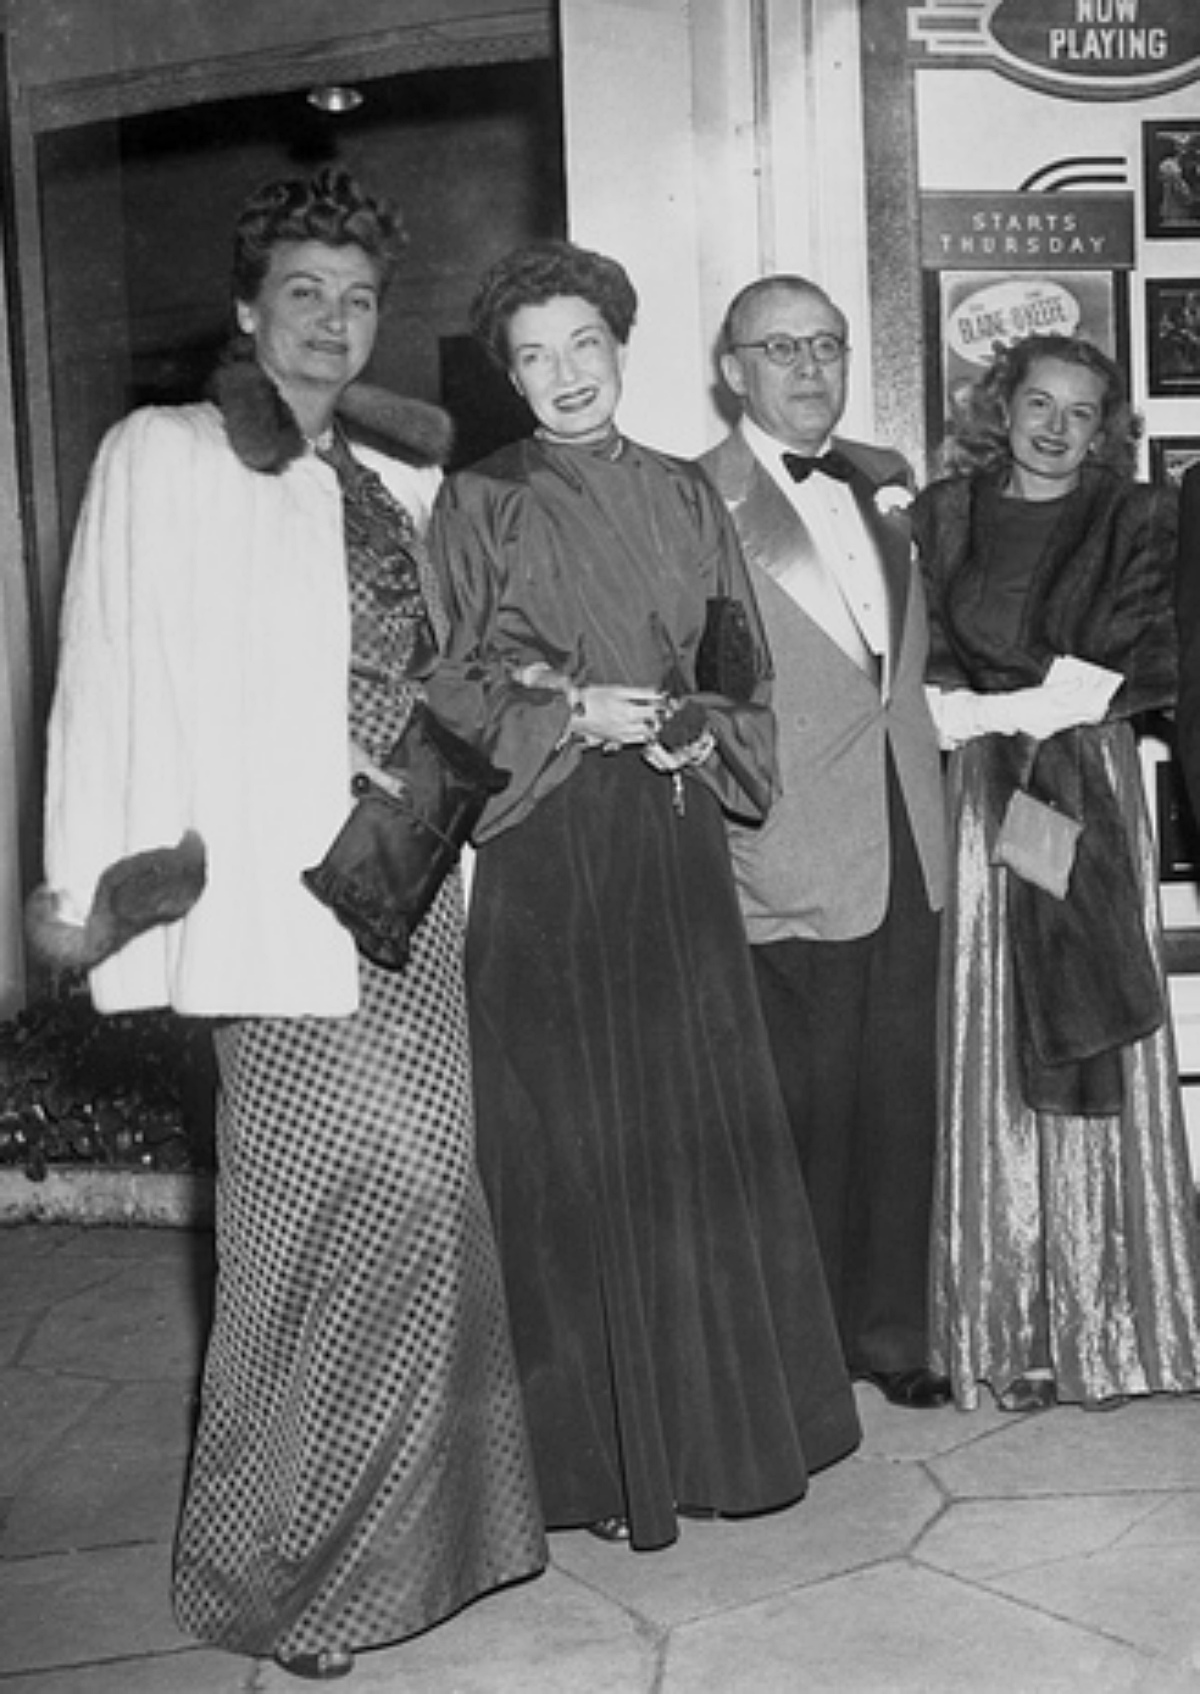 Countees Mon von Bismarck with friends at an evening event, 1943